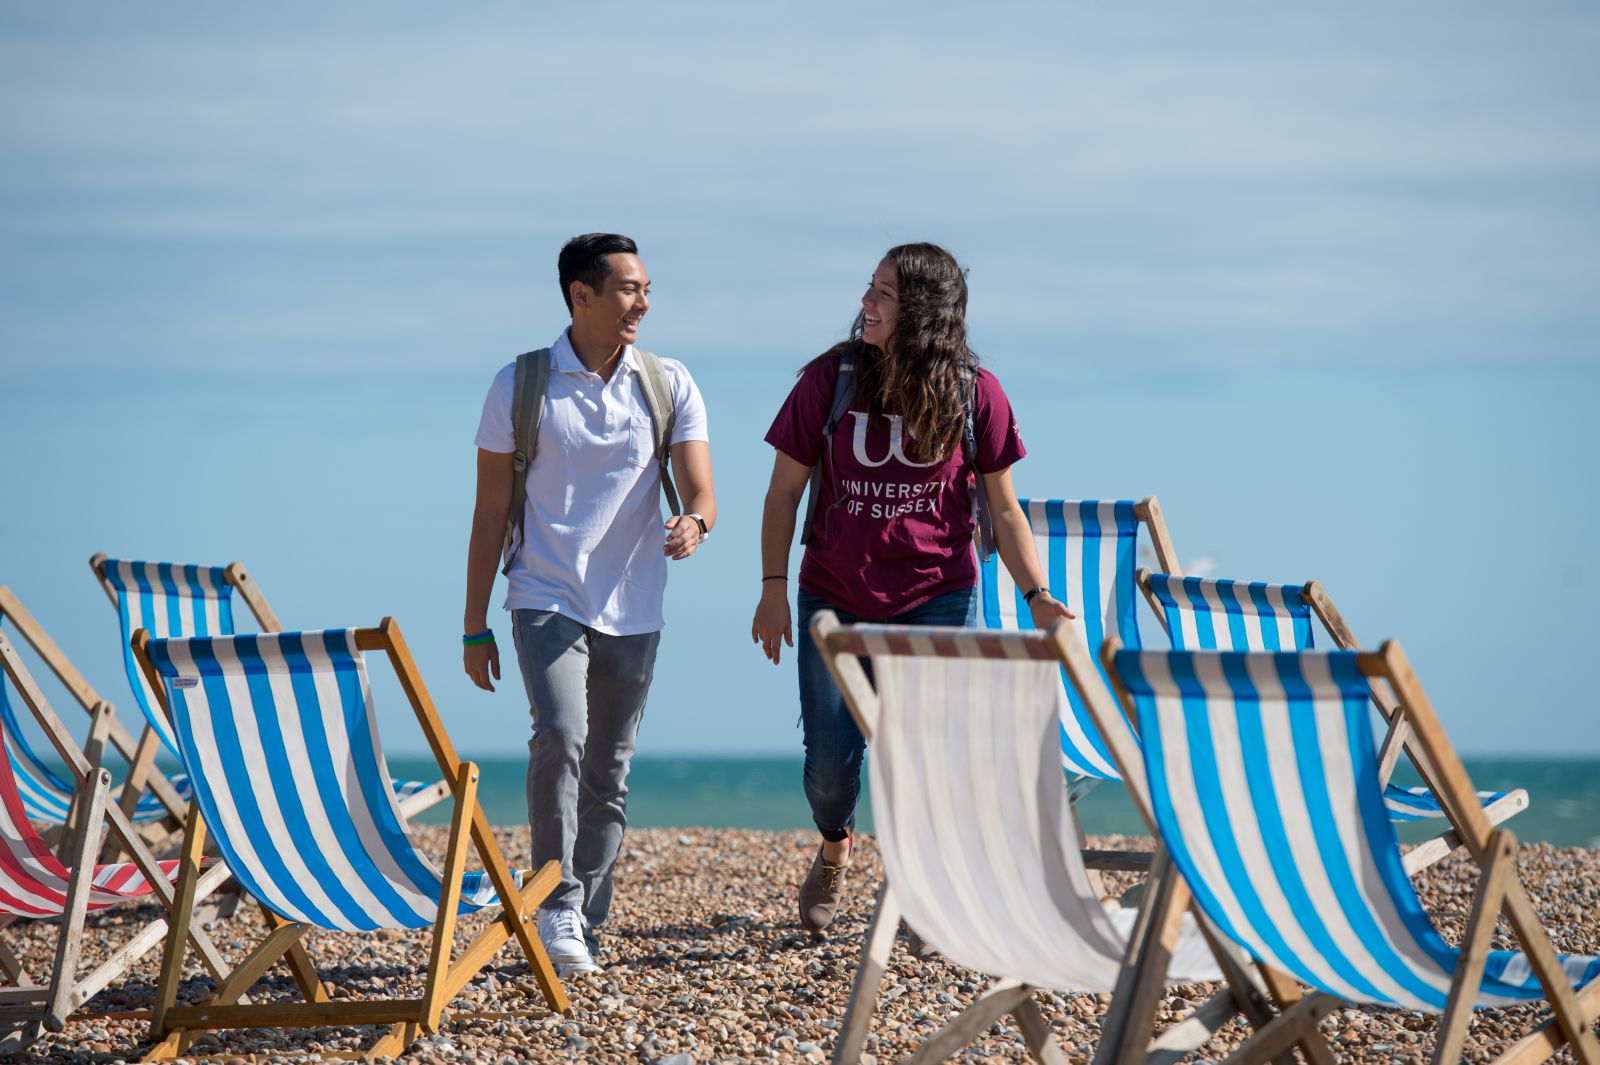 Students on Brighton beach